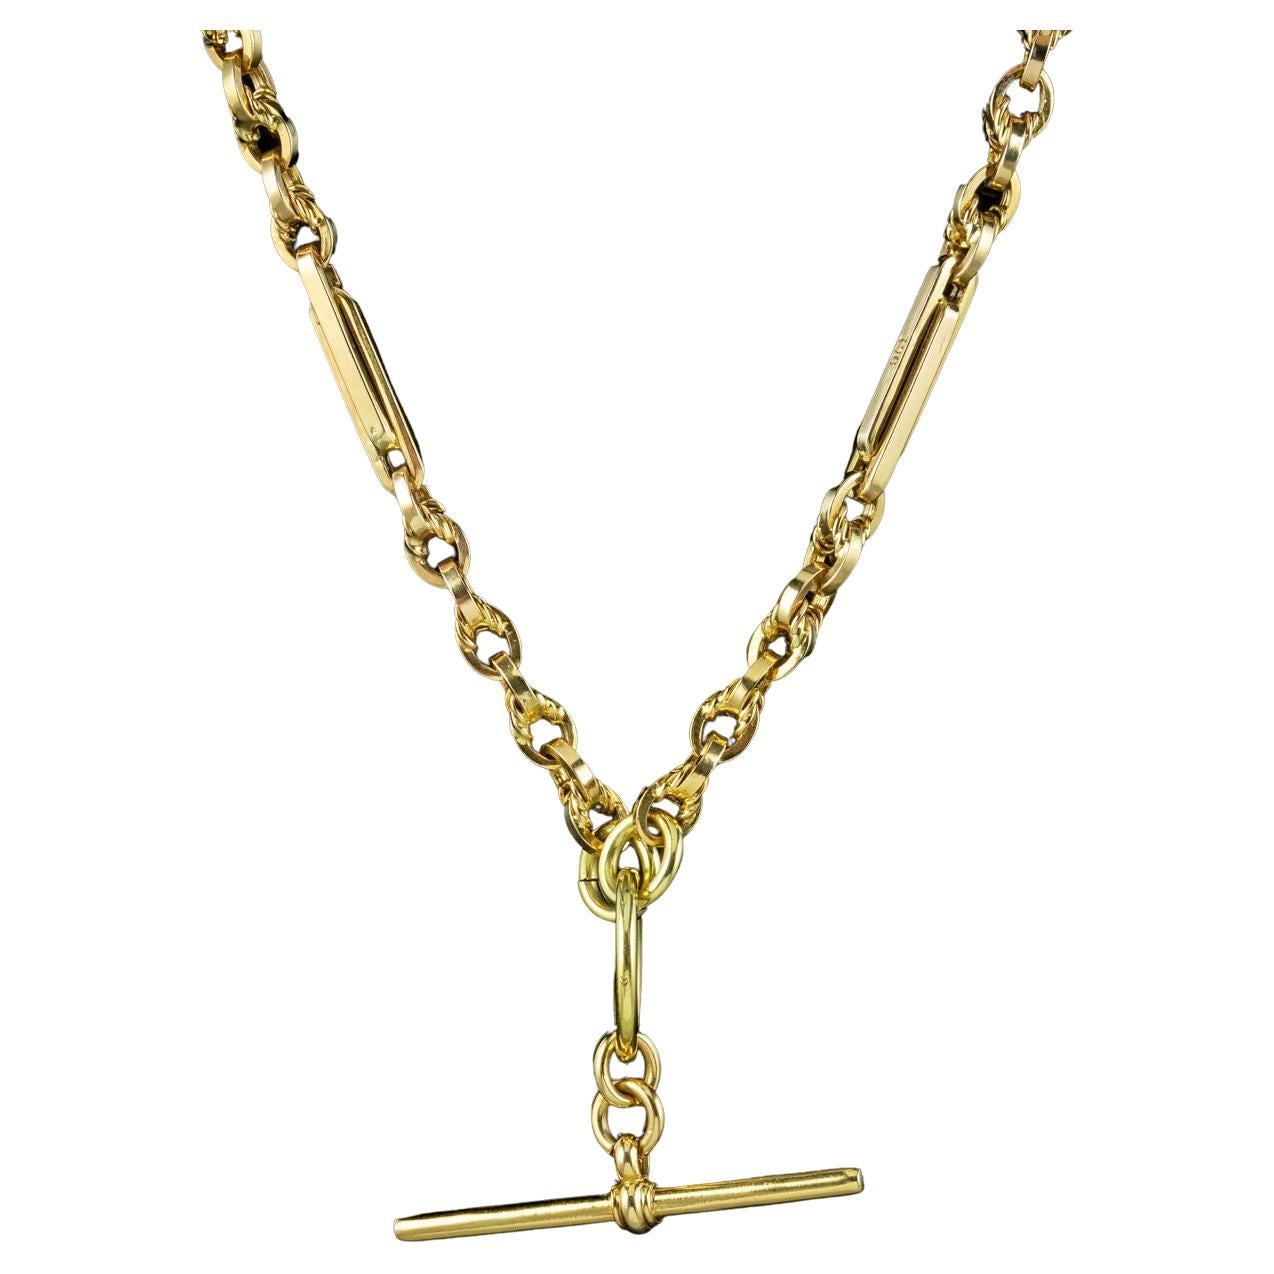 Antique Victorian Albert Chain Necklace 9ct Gold